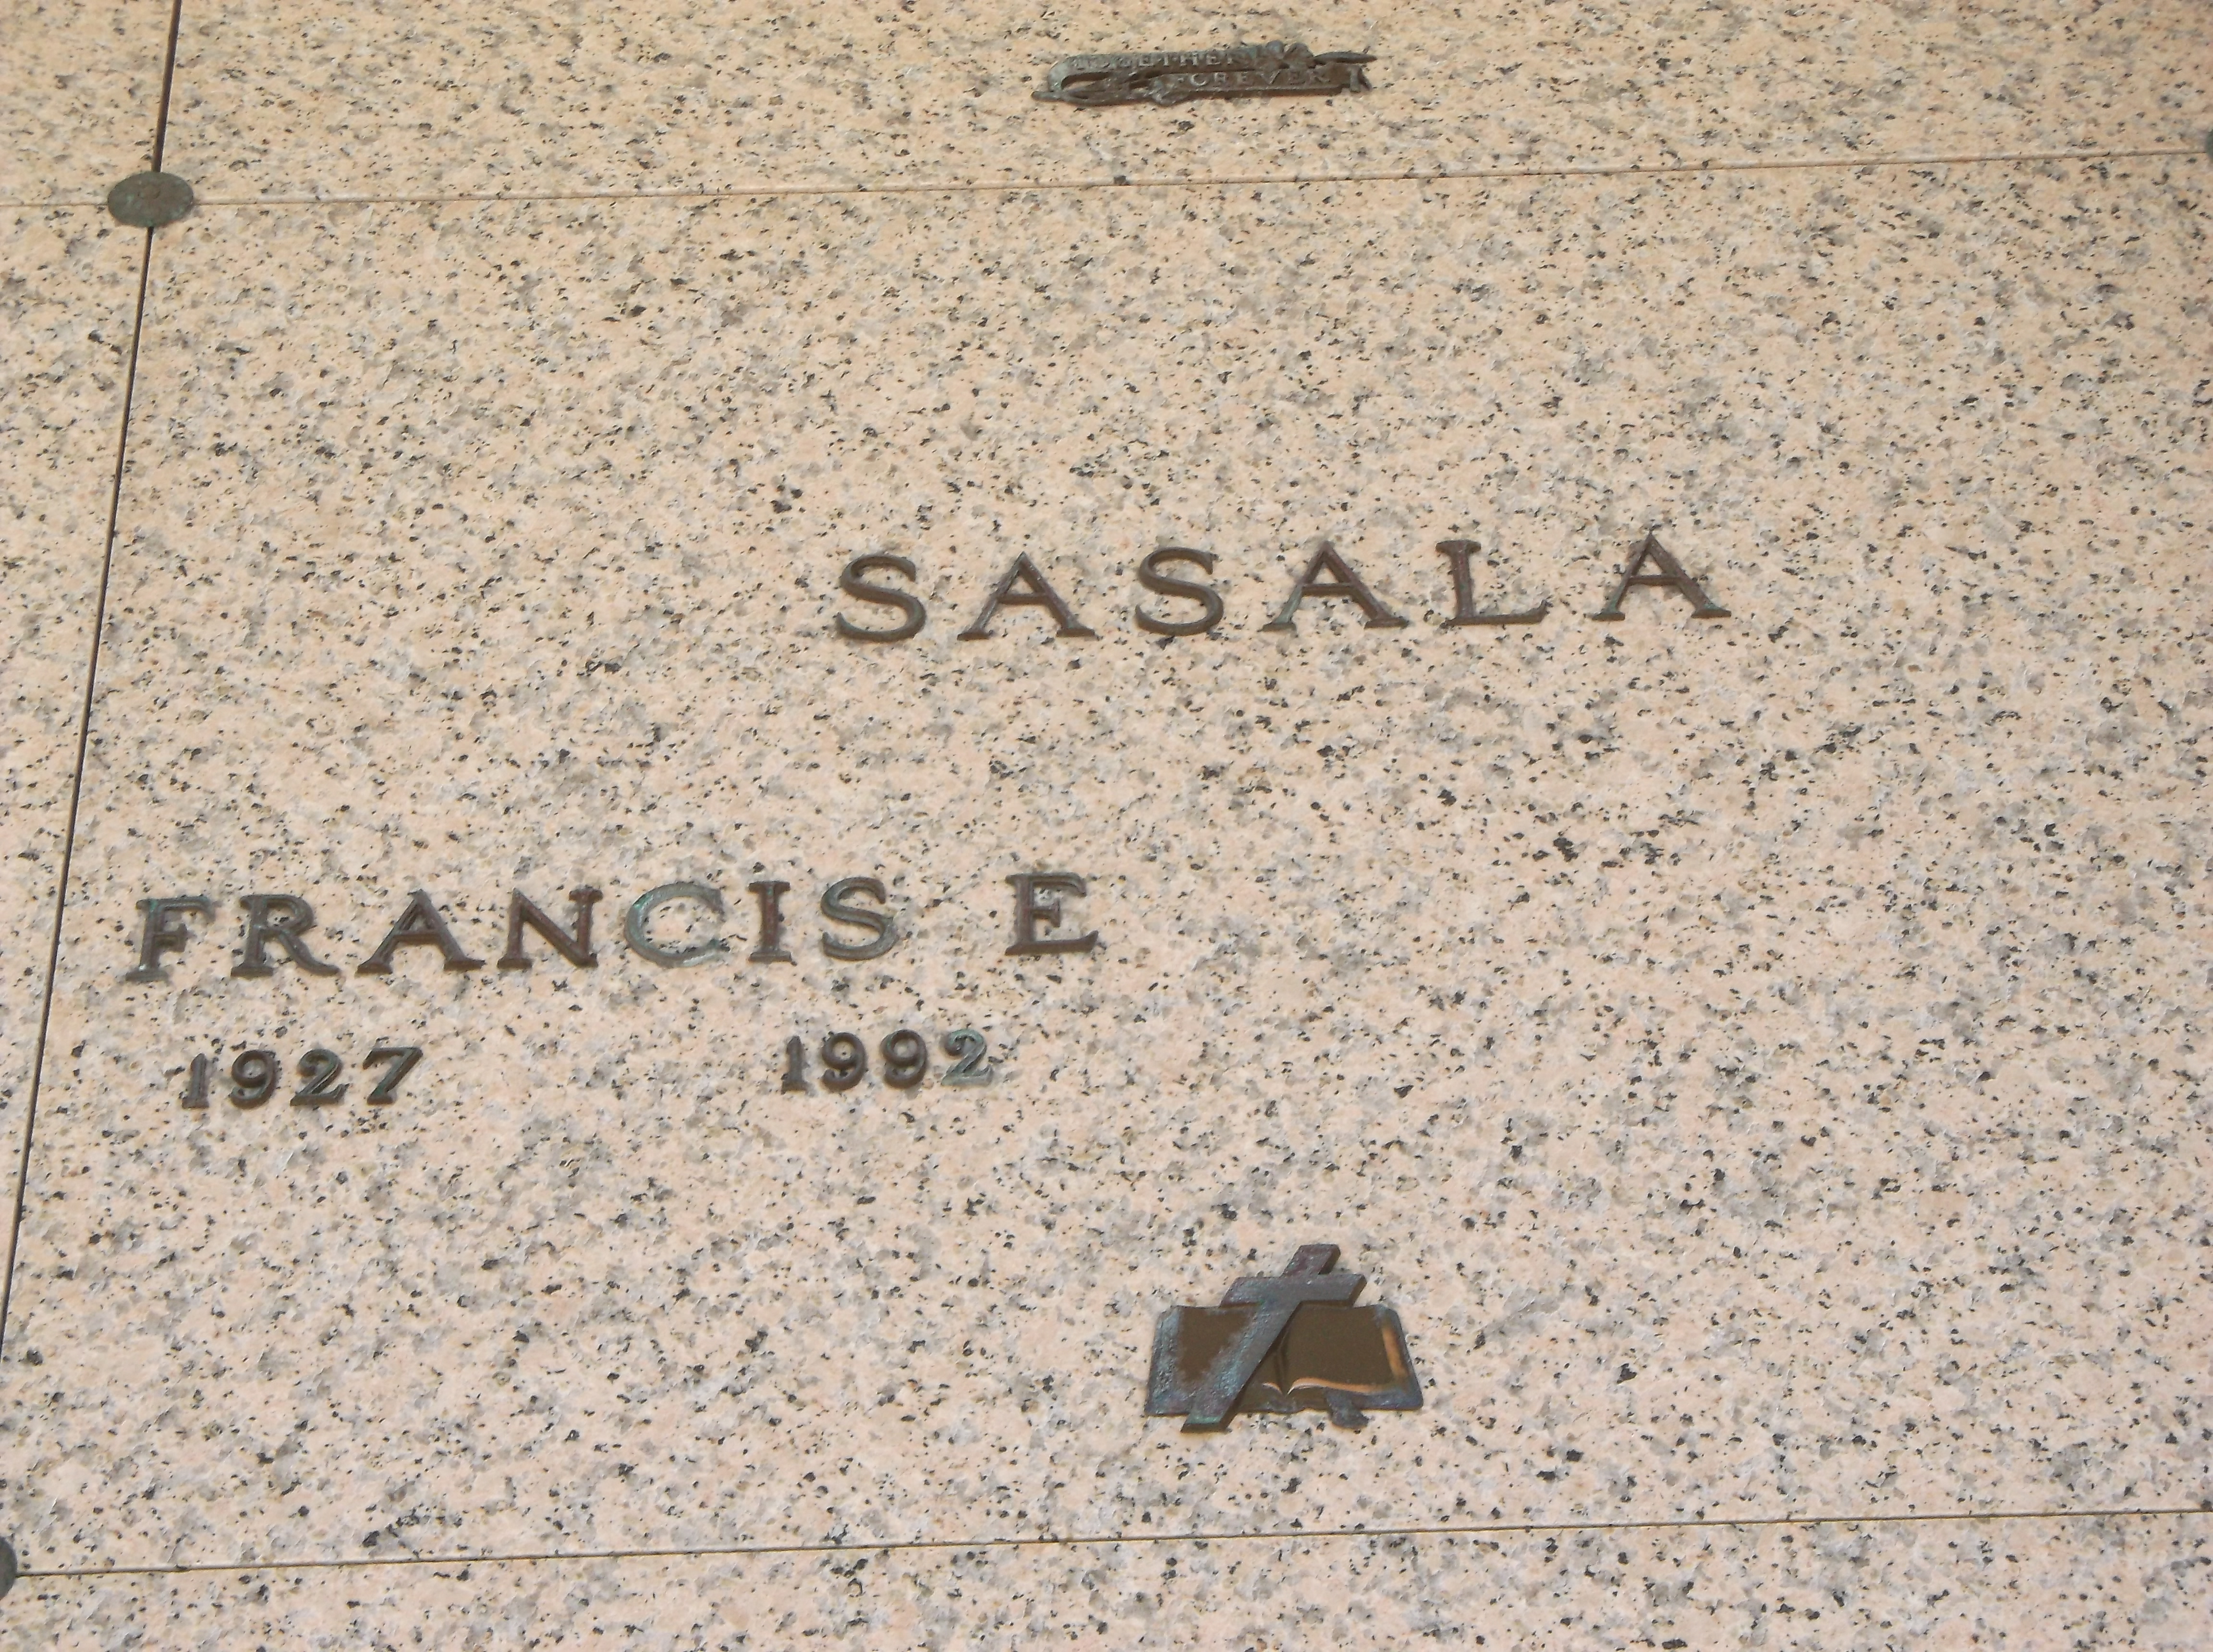 Francis E Sasala